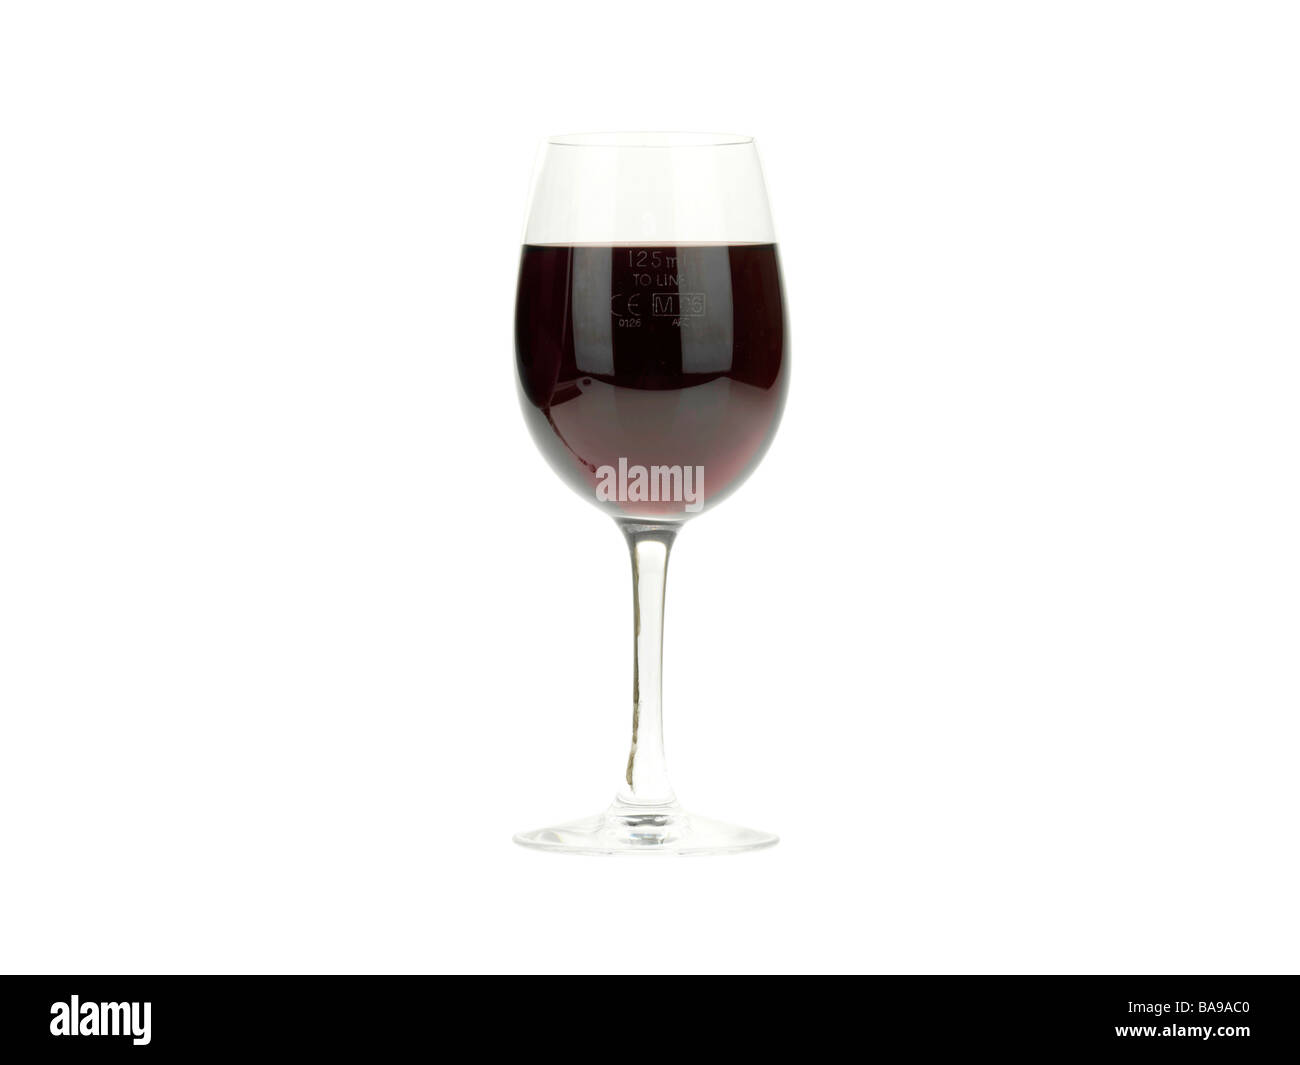 125ml verre de vin Photo Stock - Alamy